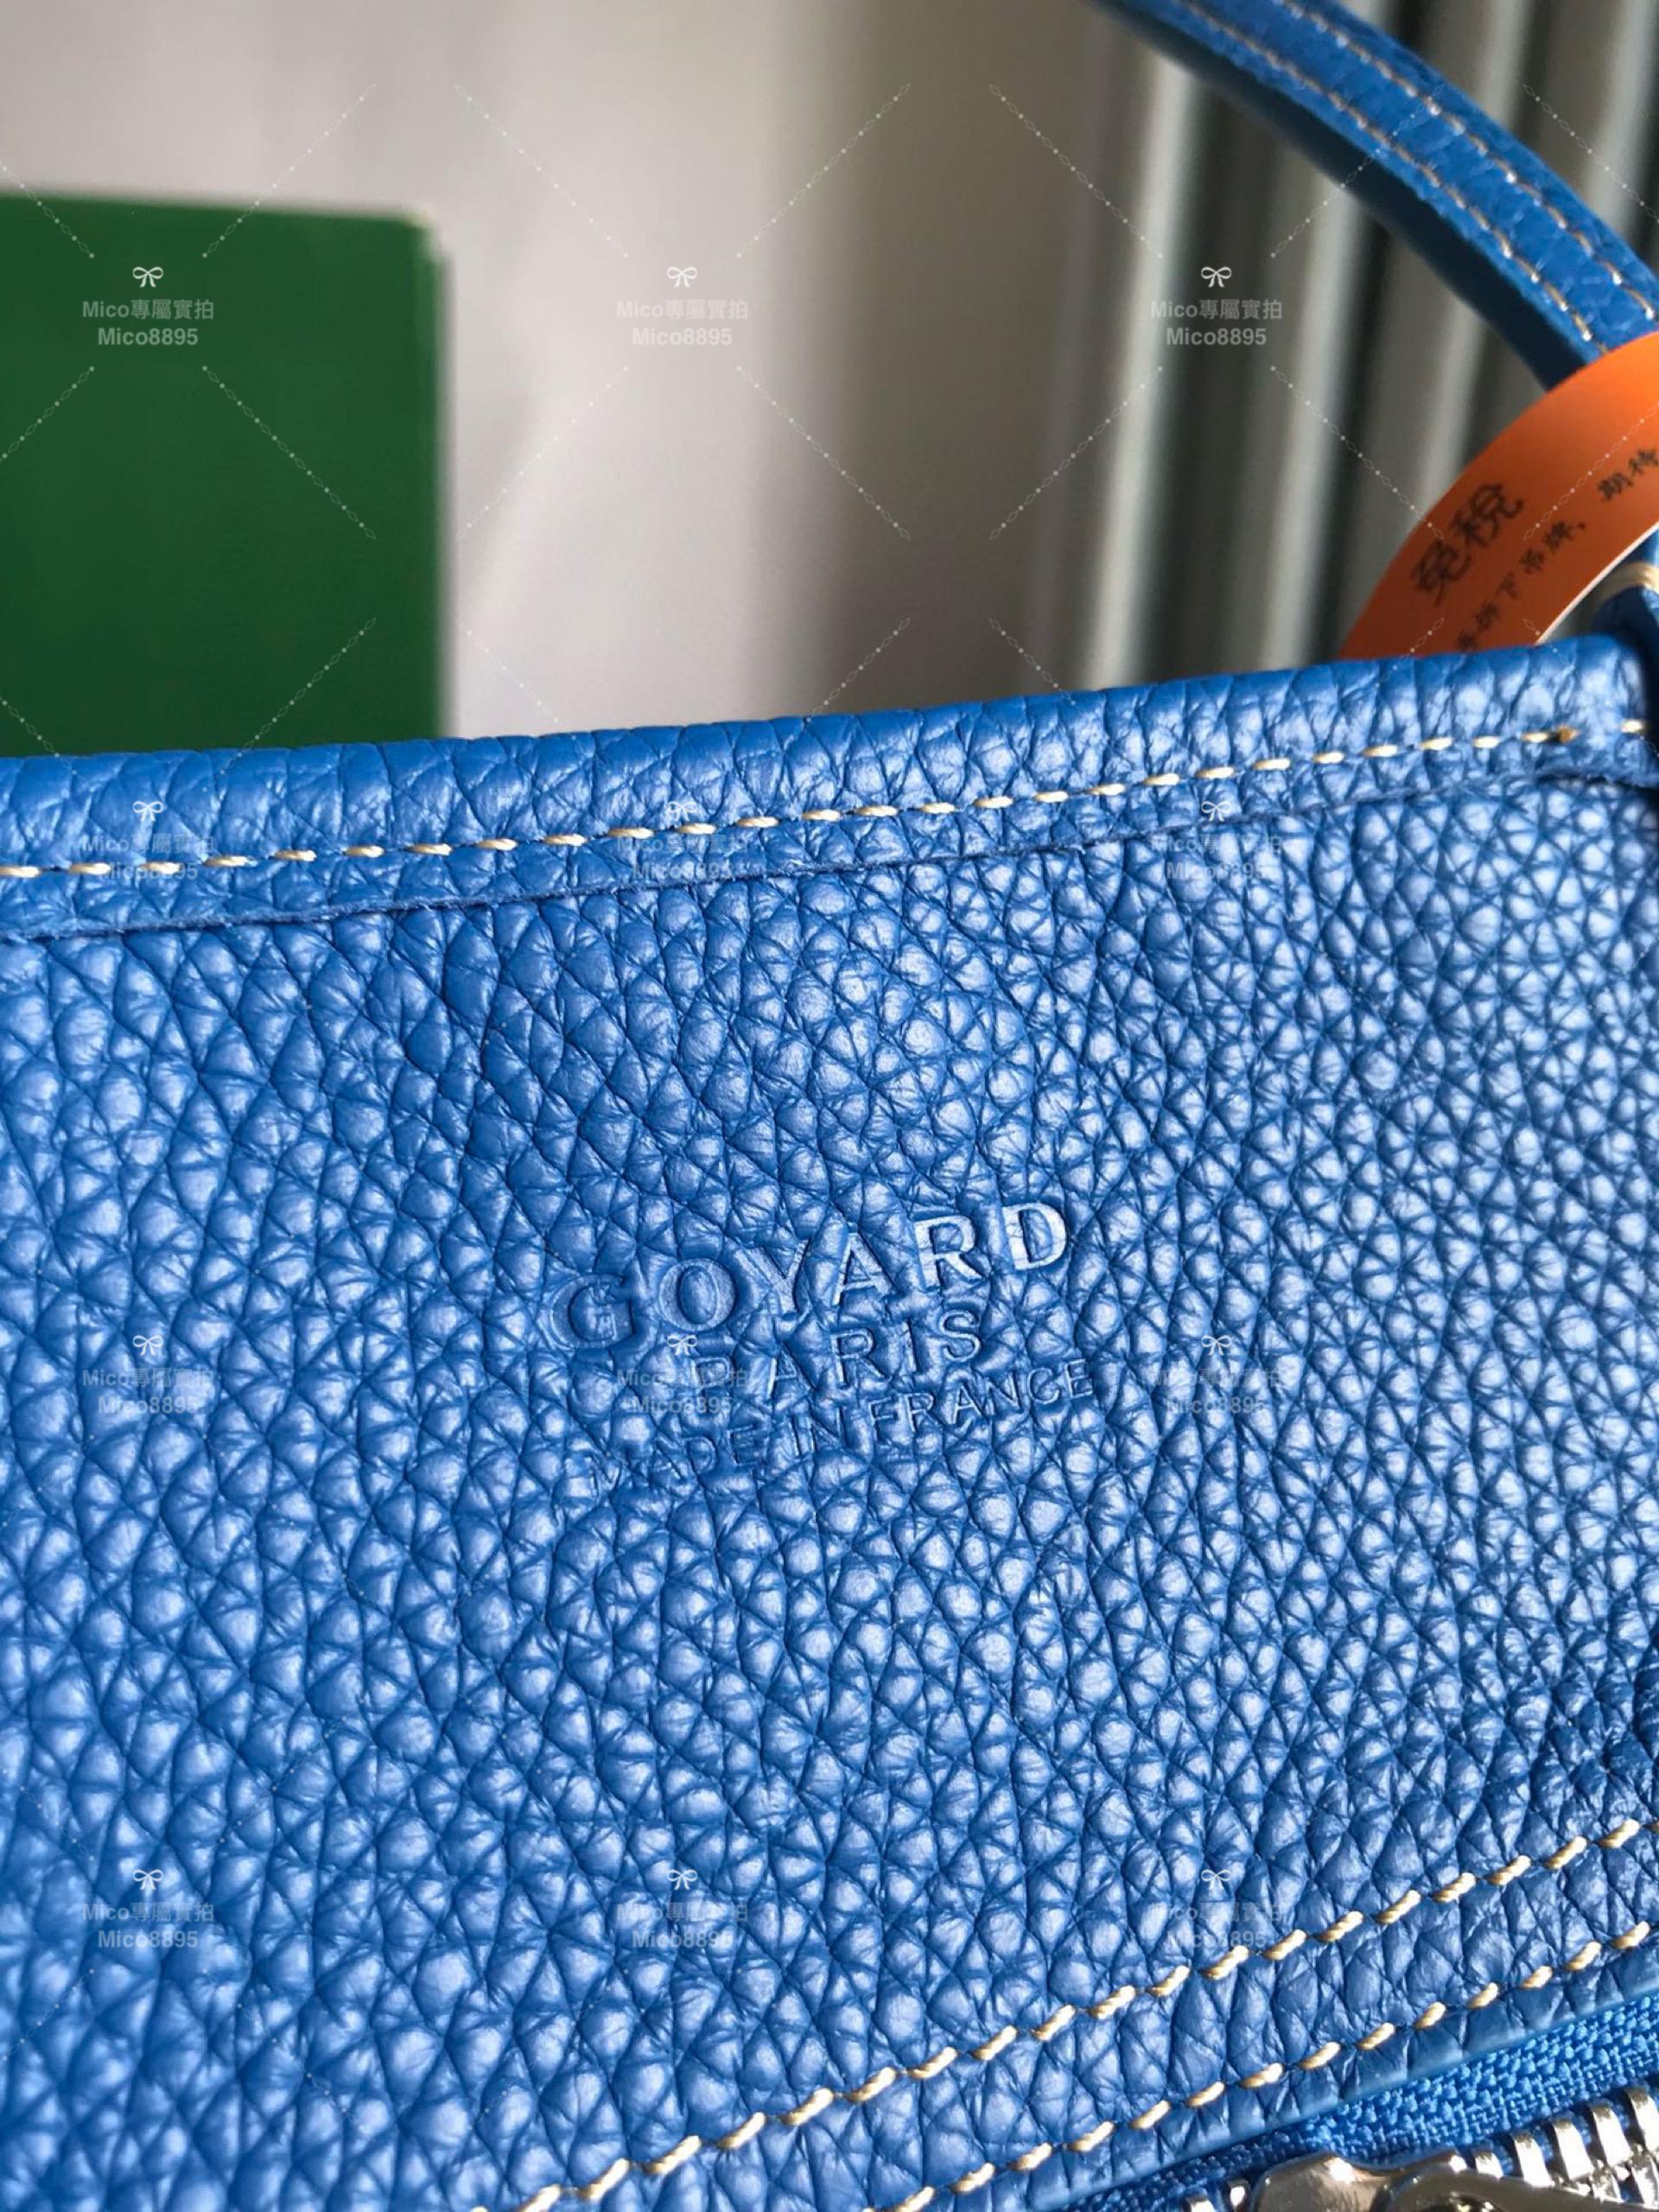 Goyard 亮藍色 hardy bag 購物袋/旅行包/寵物包